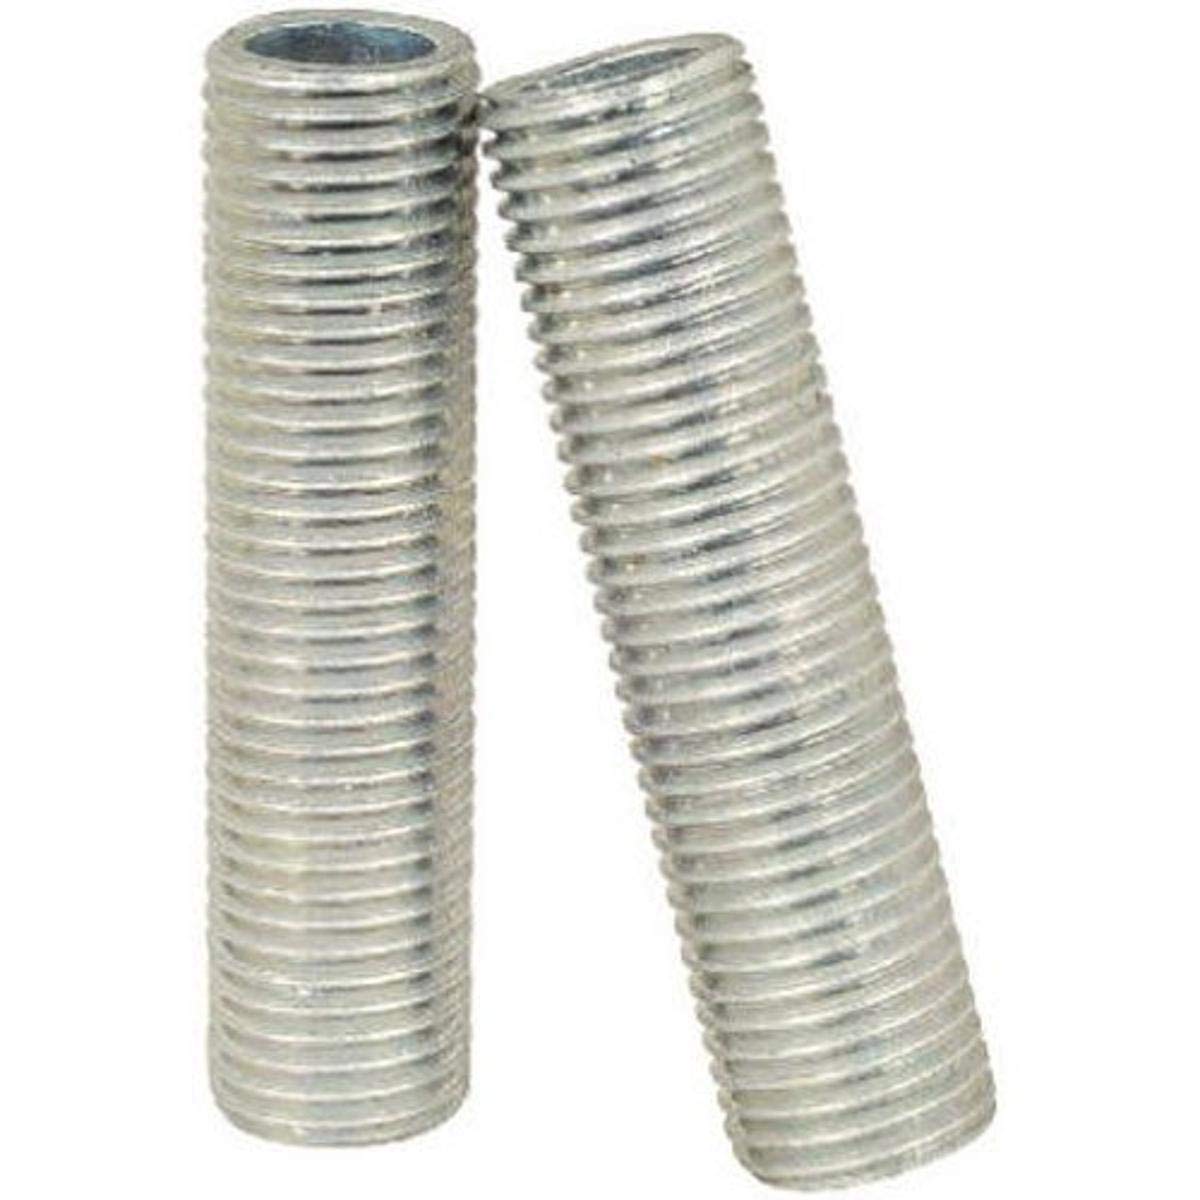 4 Steel Nipples Zinc-Plated 1 1/2" Long